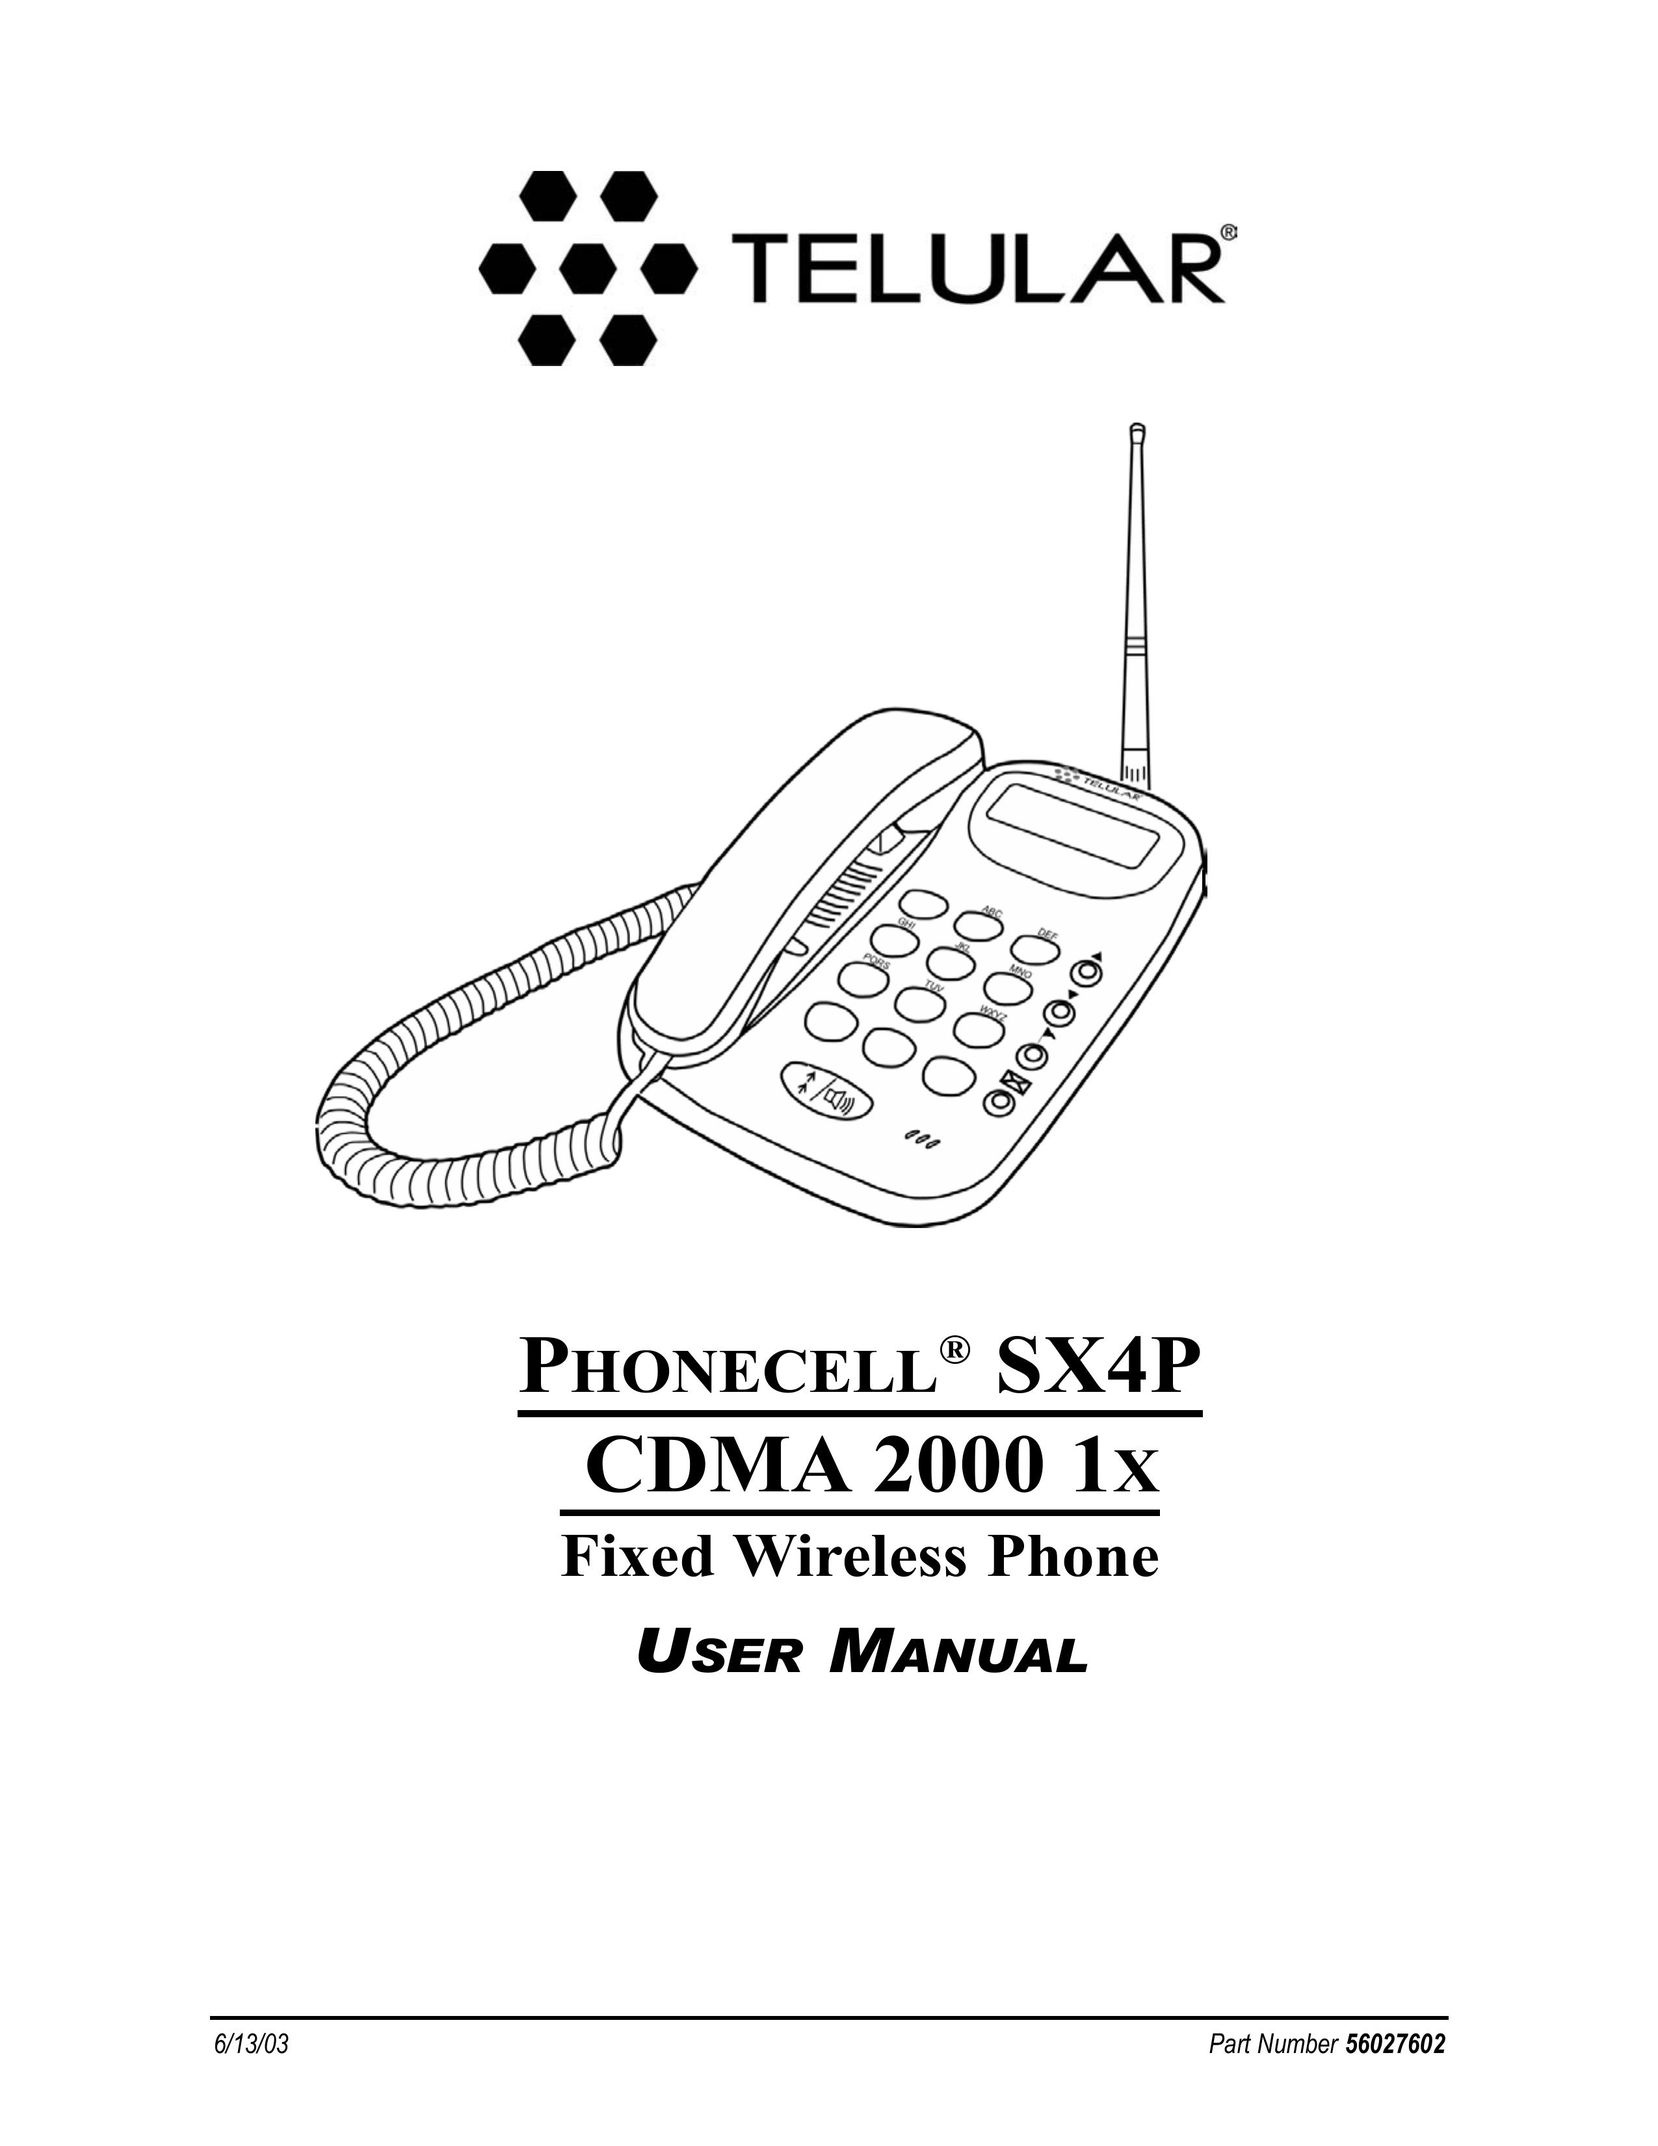 Telular CDMA 2000 1X Cordless Telephone User Manual